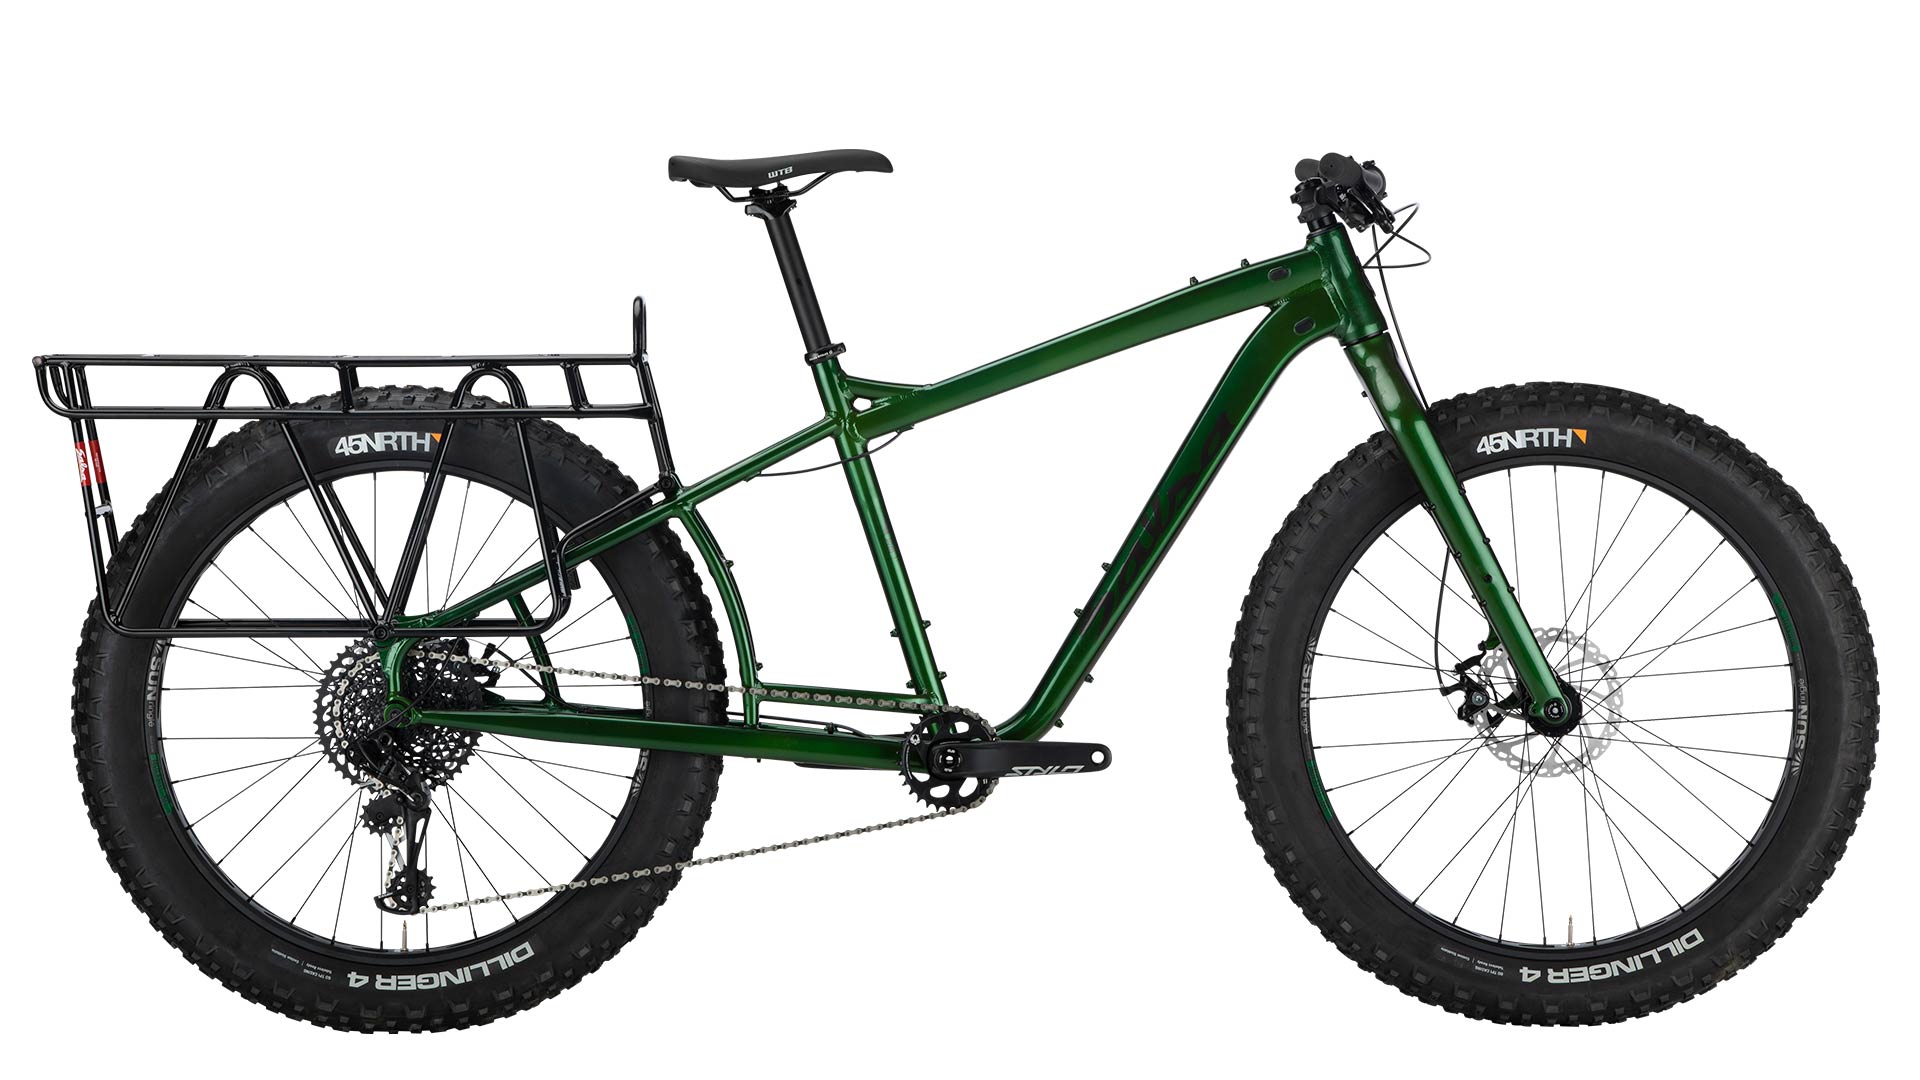 Salsa-2020-Blackborow-GX-Eagle-Green-Fat-Bike-1920x1080-uc-1.jpg